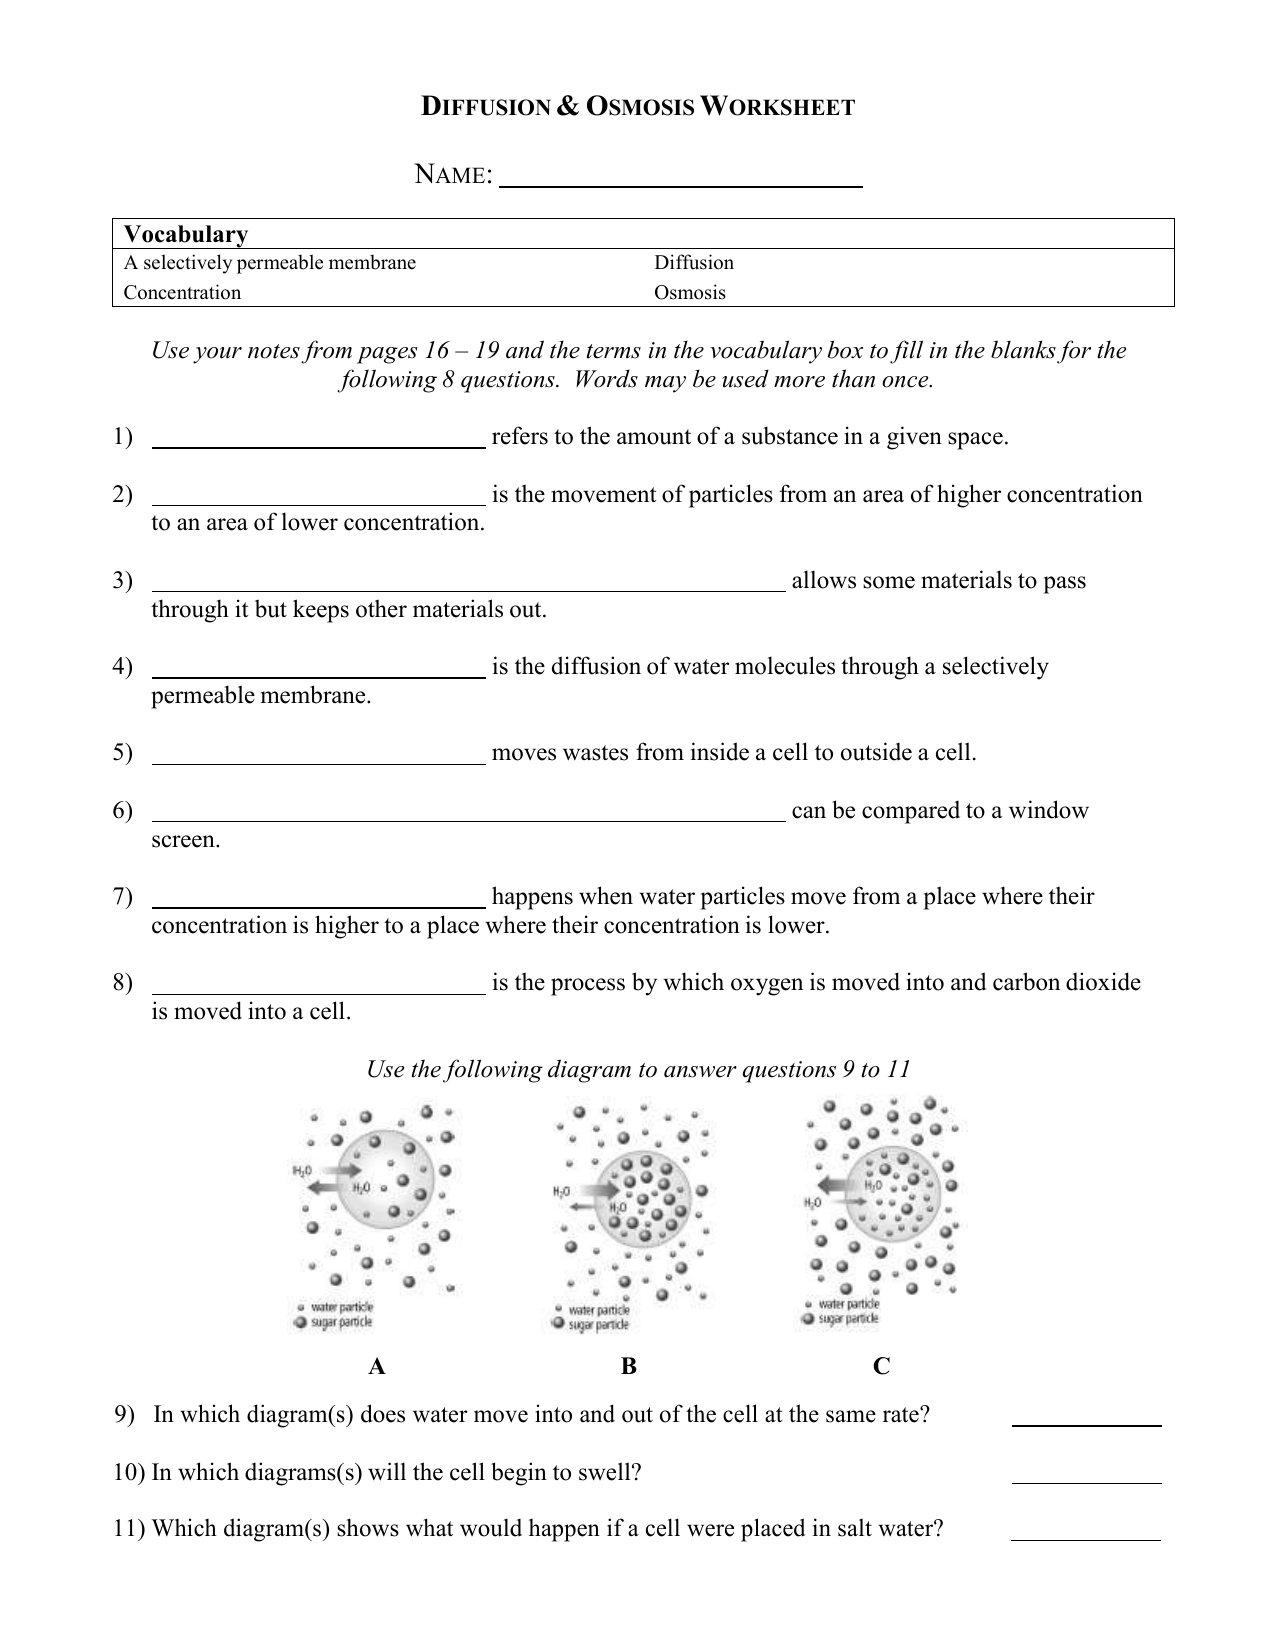 Diffusion-Osmosis-Worksheet 11 For Diffusion And Osmosis Worksheet Answers